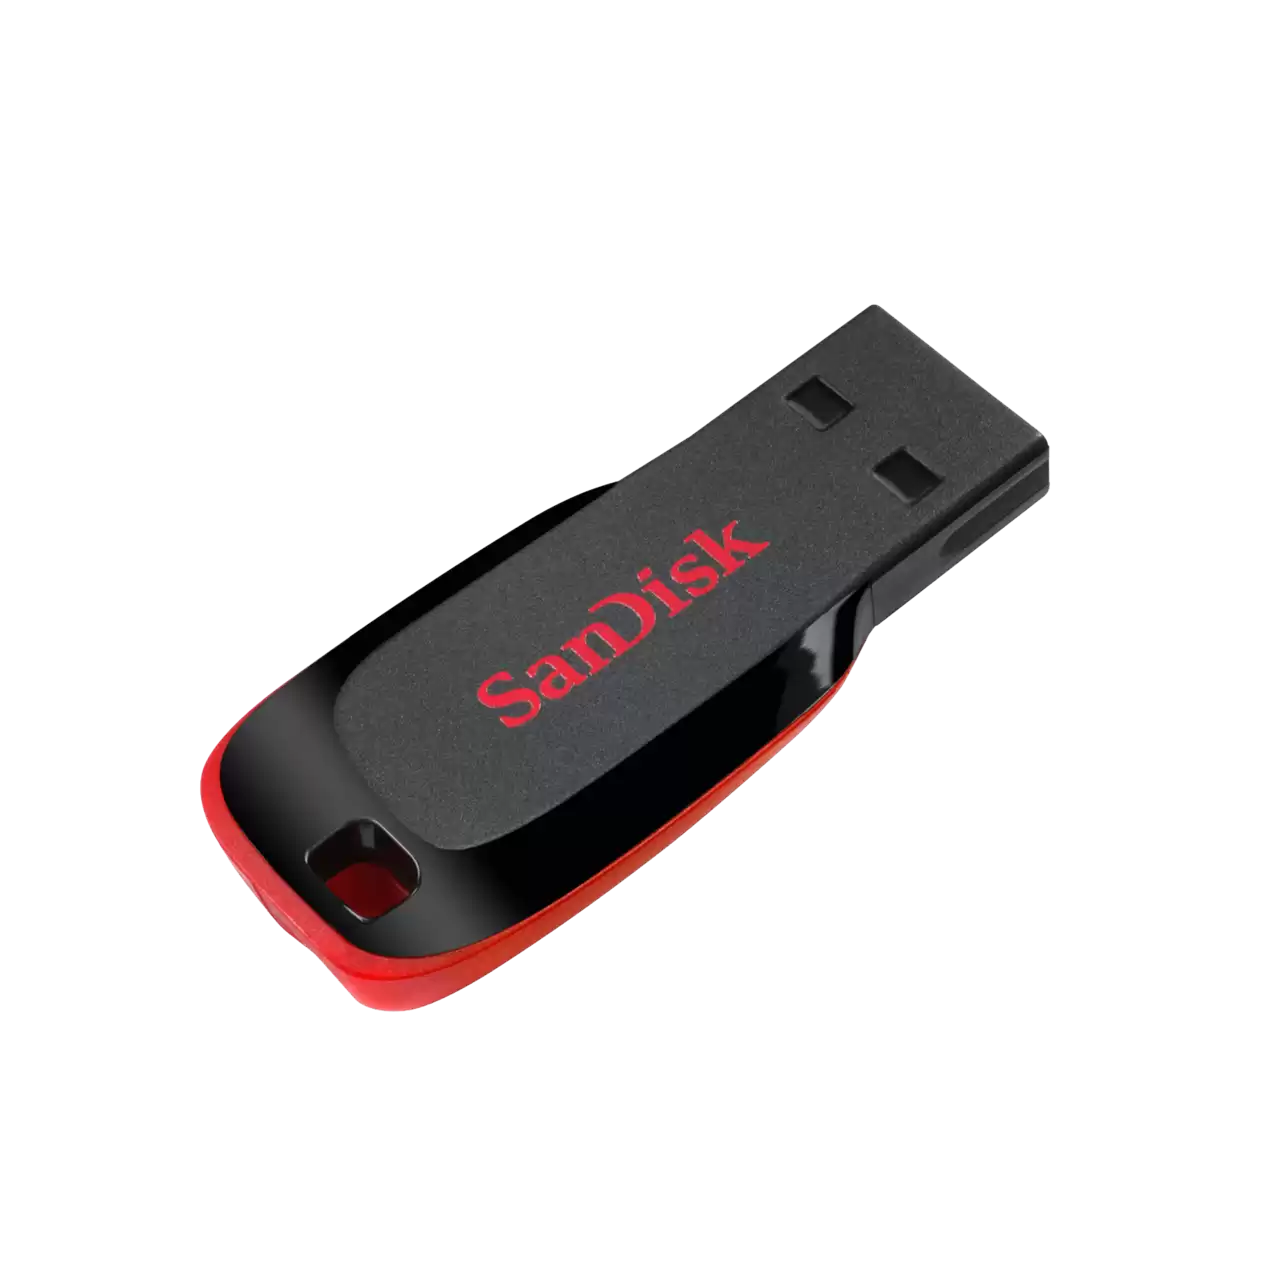 SanDisk Clé USB 2.0 8GB - Cruzer Blade USB 2.0 Flash Drive 8GB